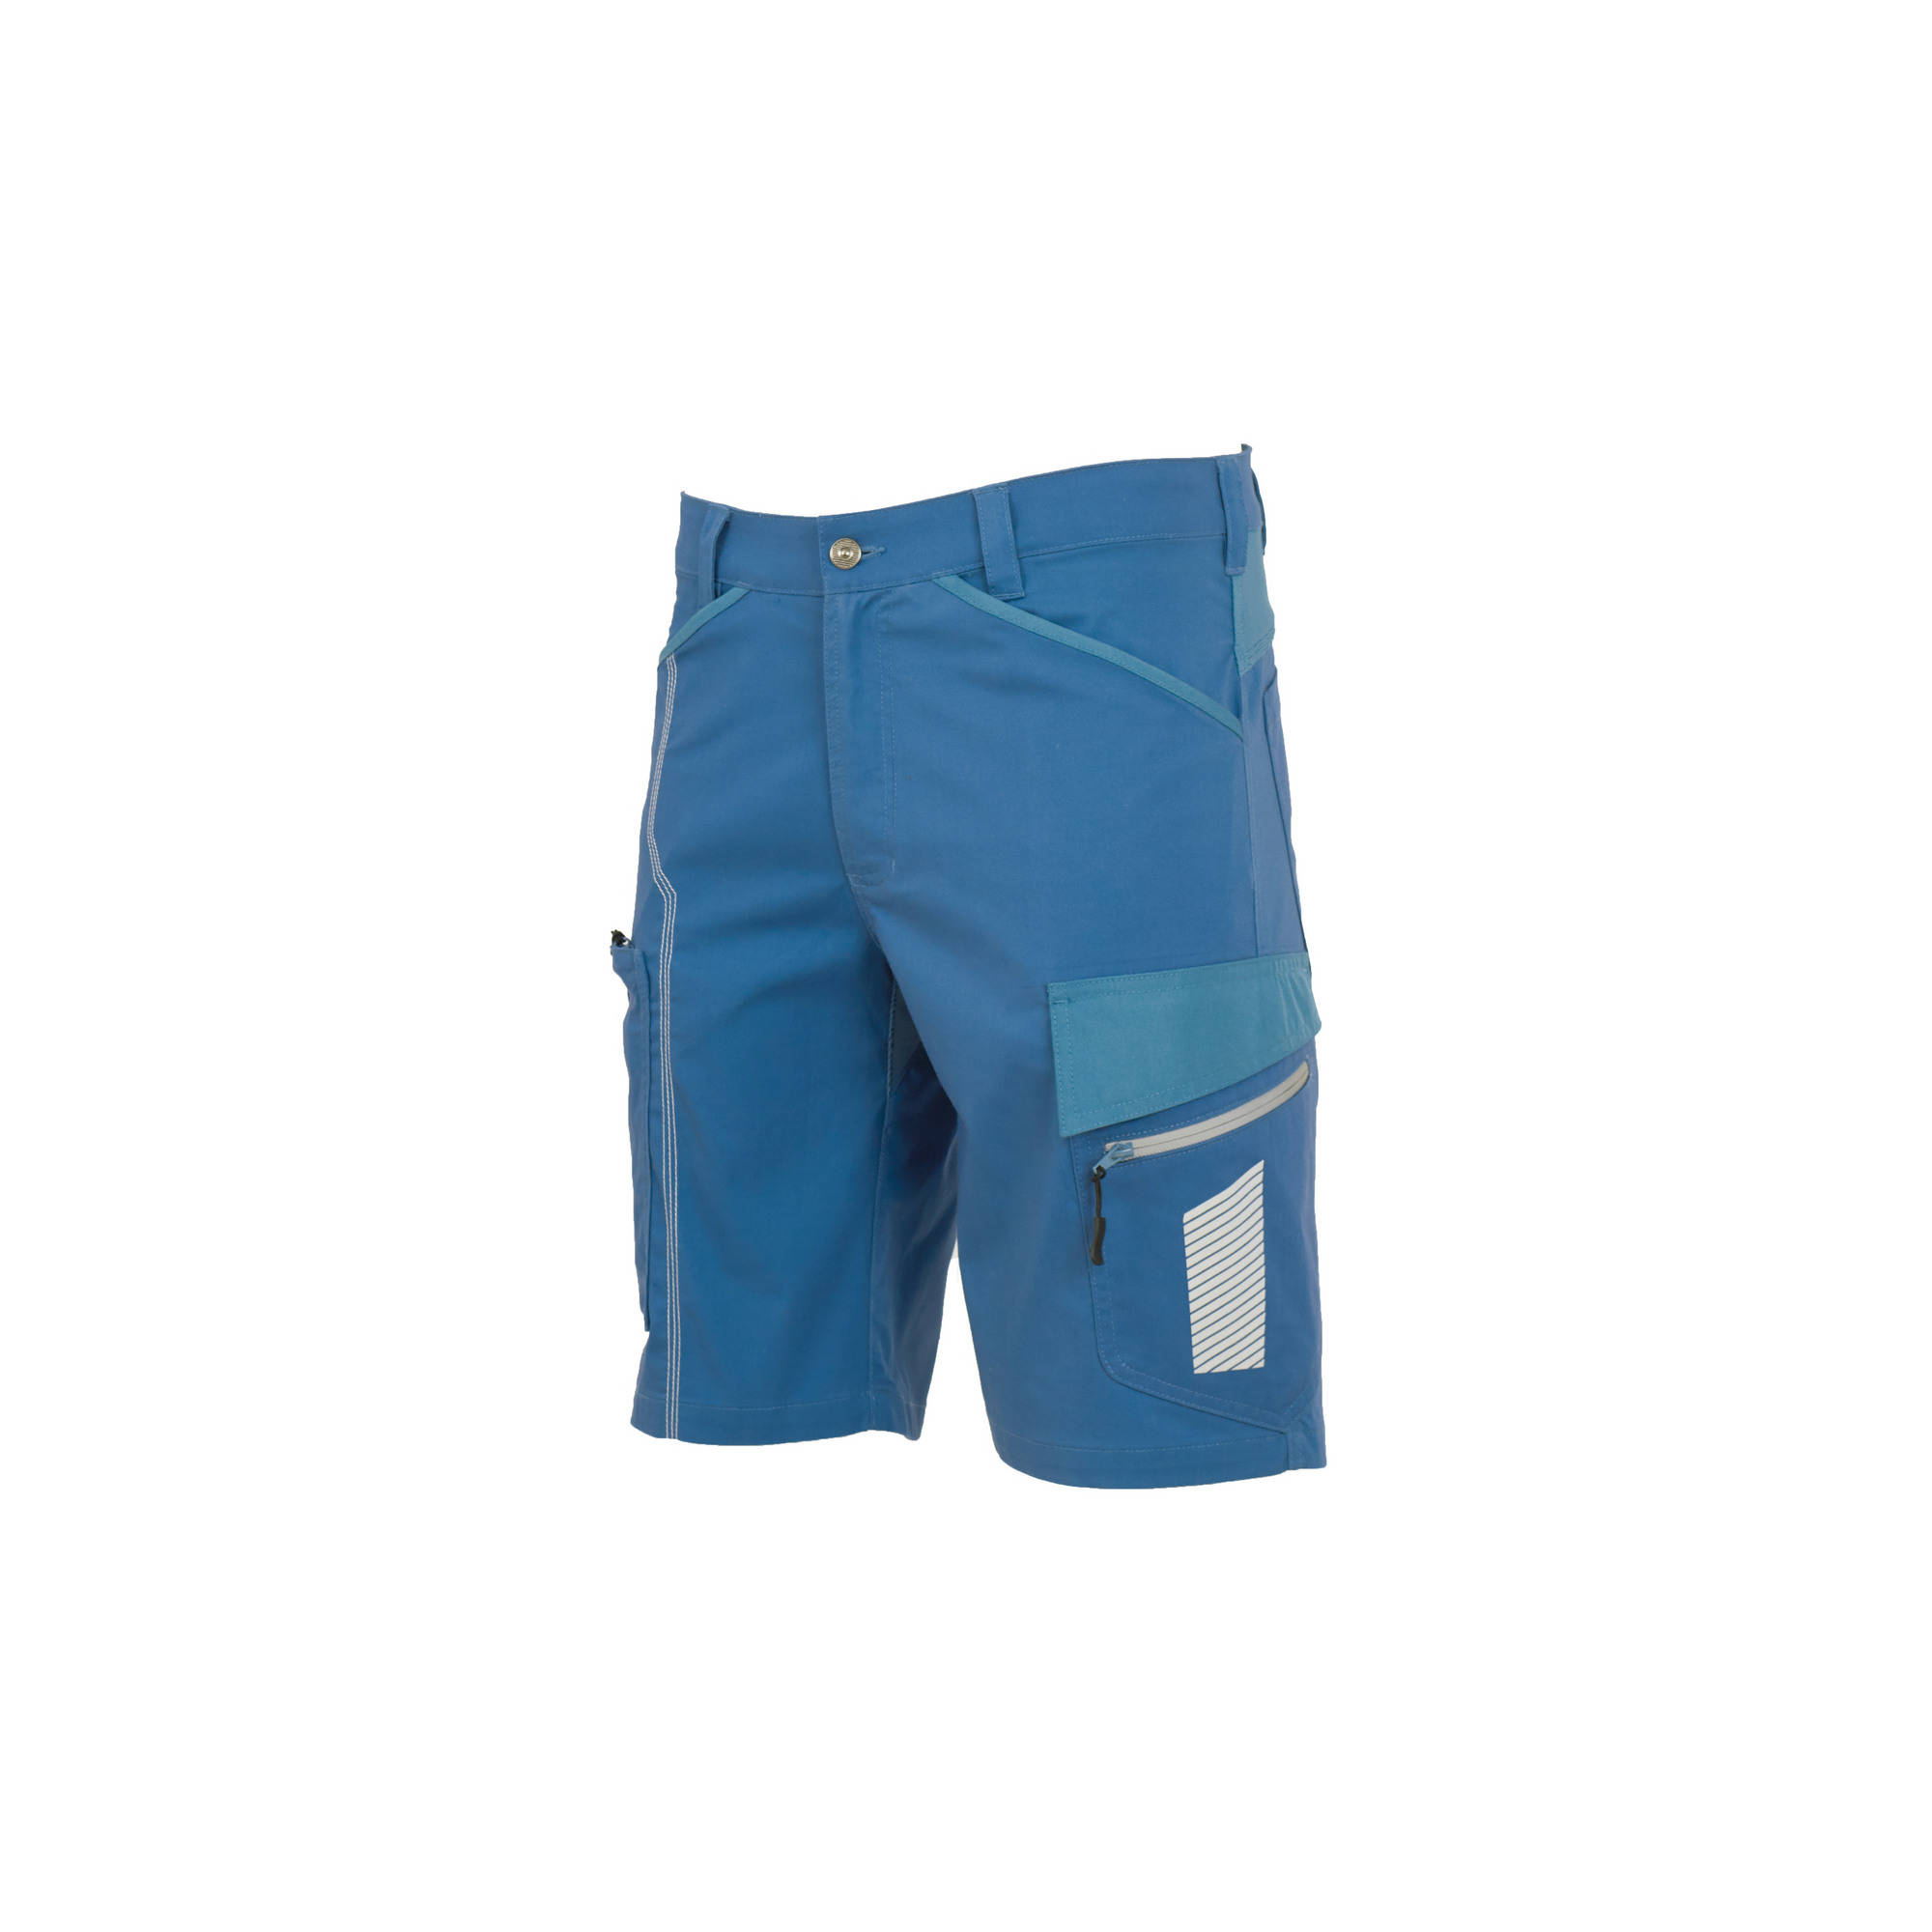 Shorts 'Taurus' blau 56 + product picture